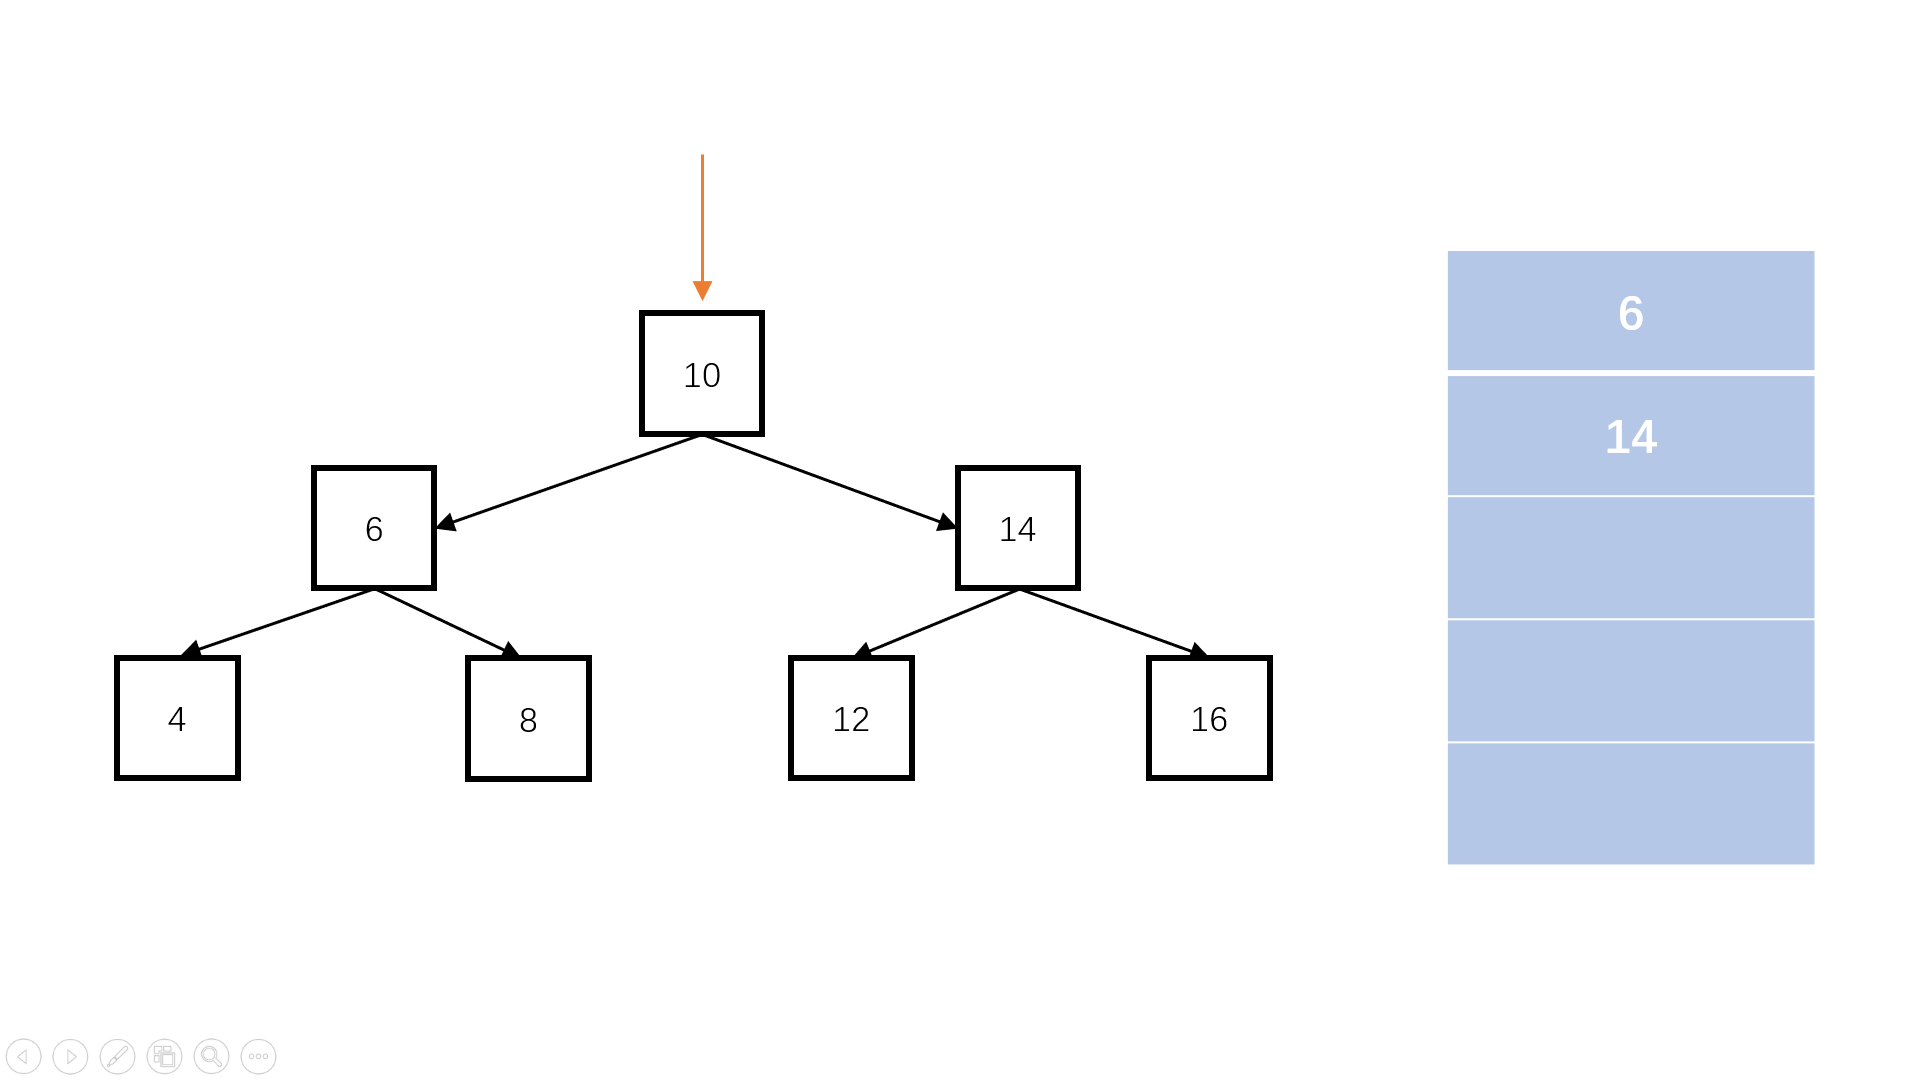 【LeetCode】102.二叉树的层序遍历